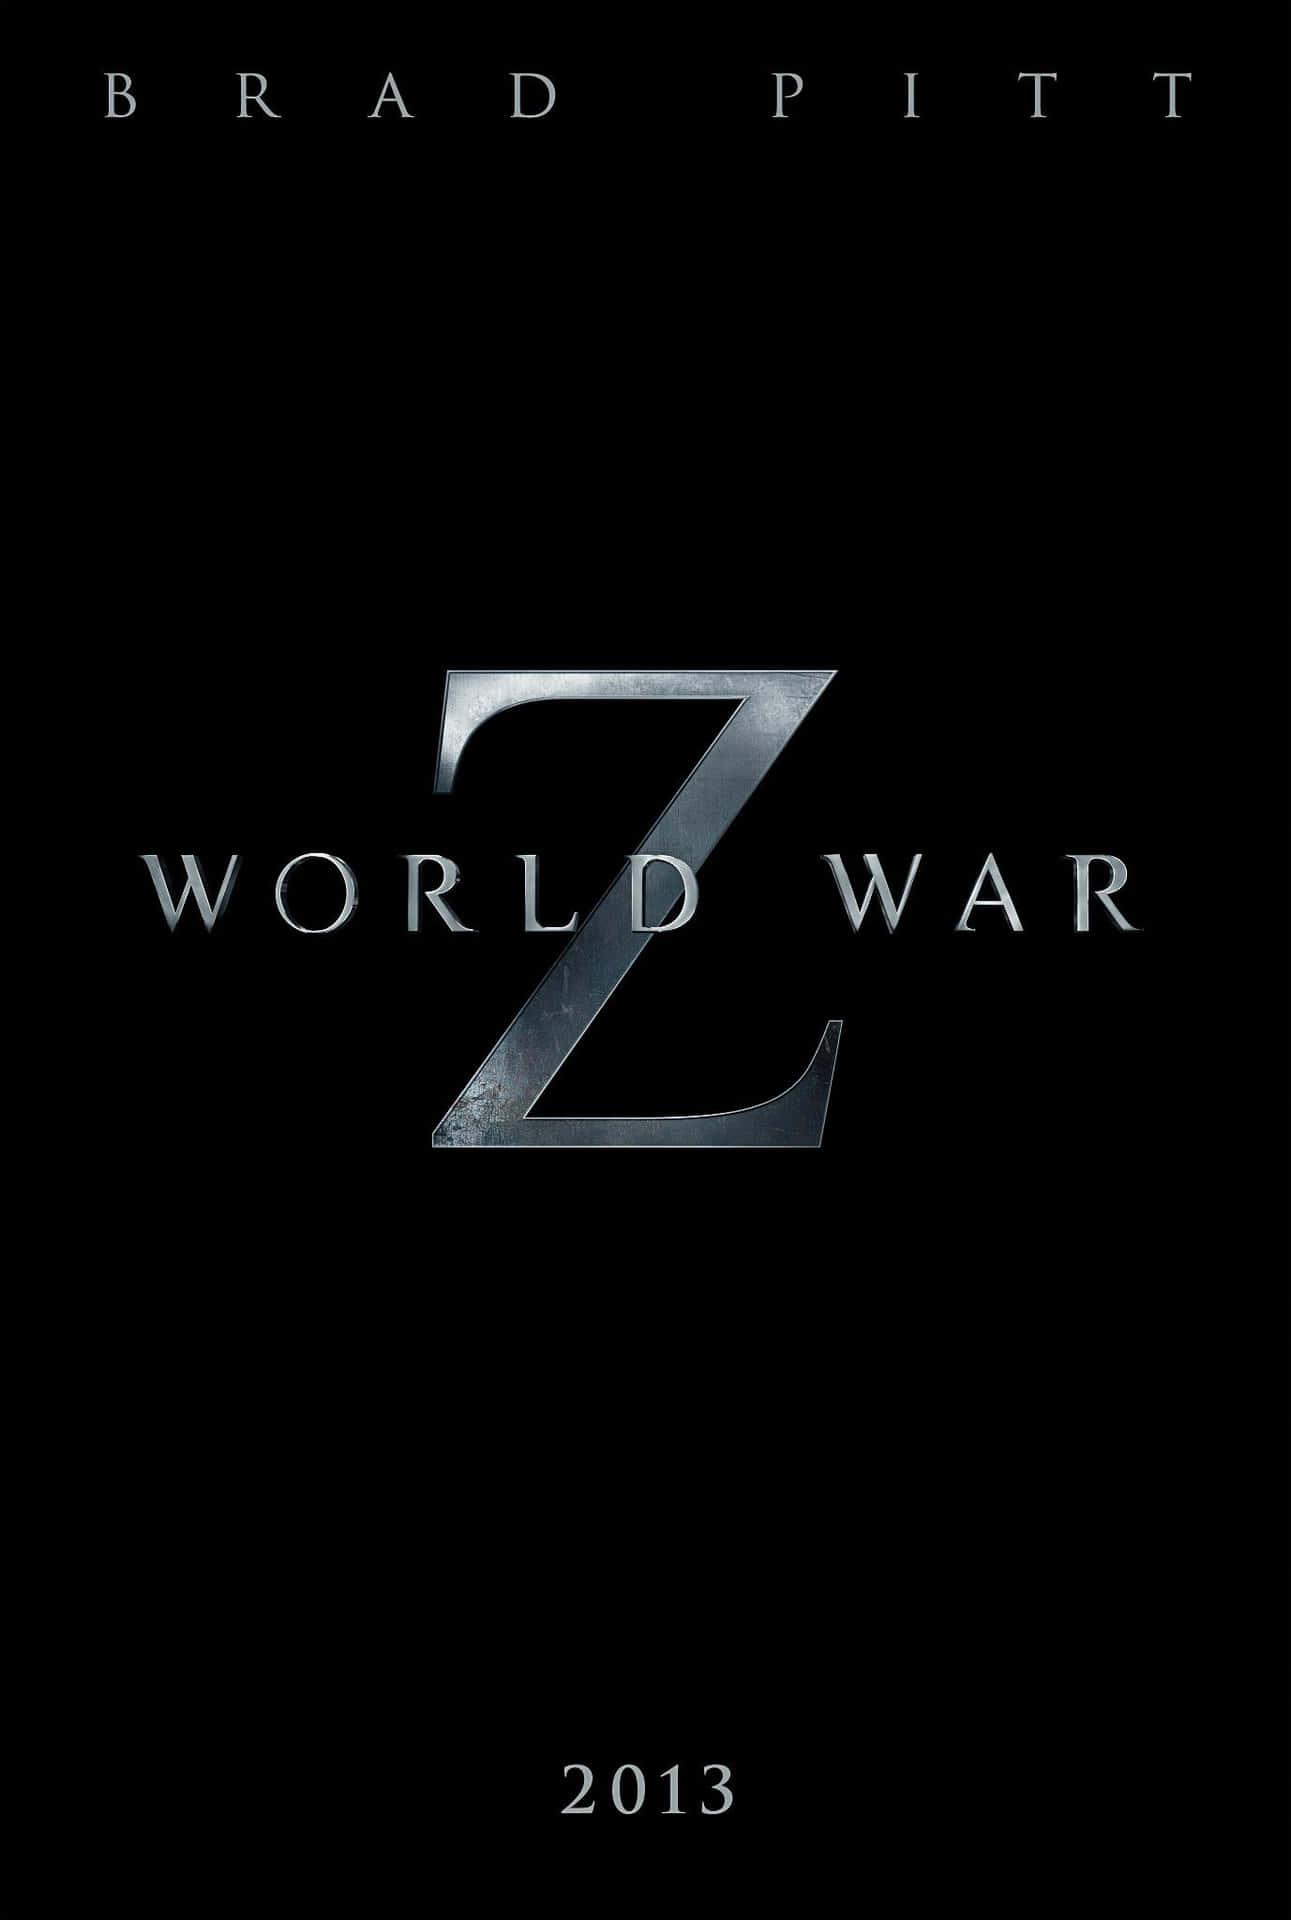 Brad Pitt stars in the action-packed zombie thriller: World War Z